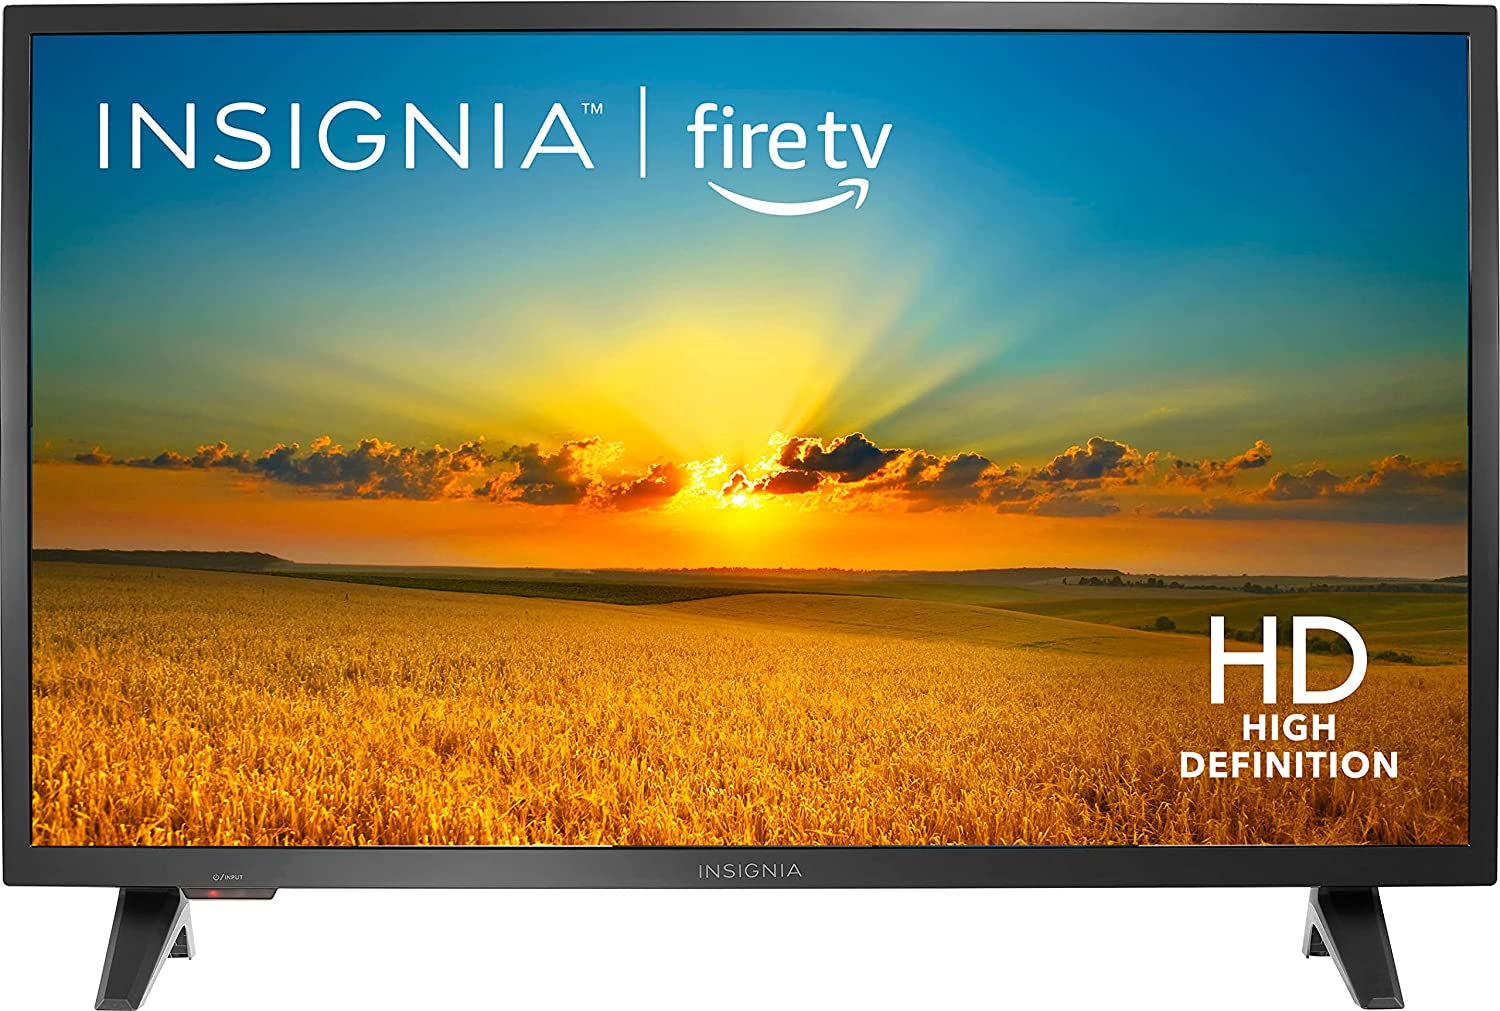 Insignia 32" F20 Series LED Smart HD 720P Fire TV-$89.99